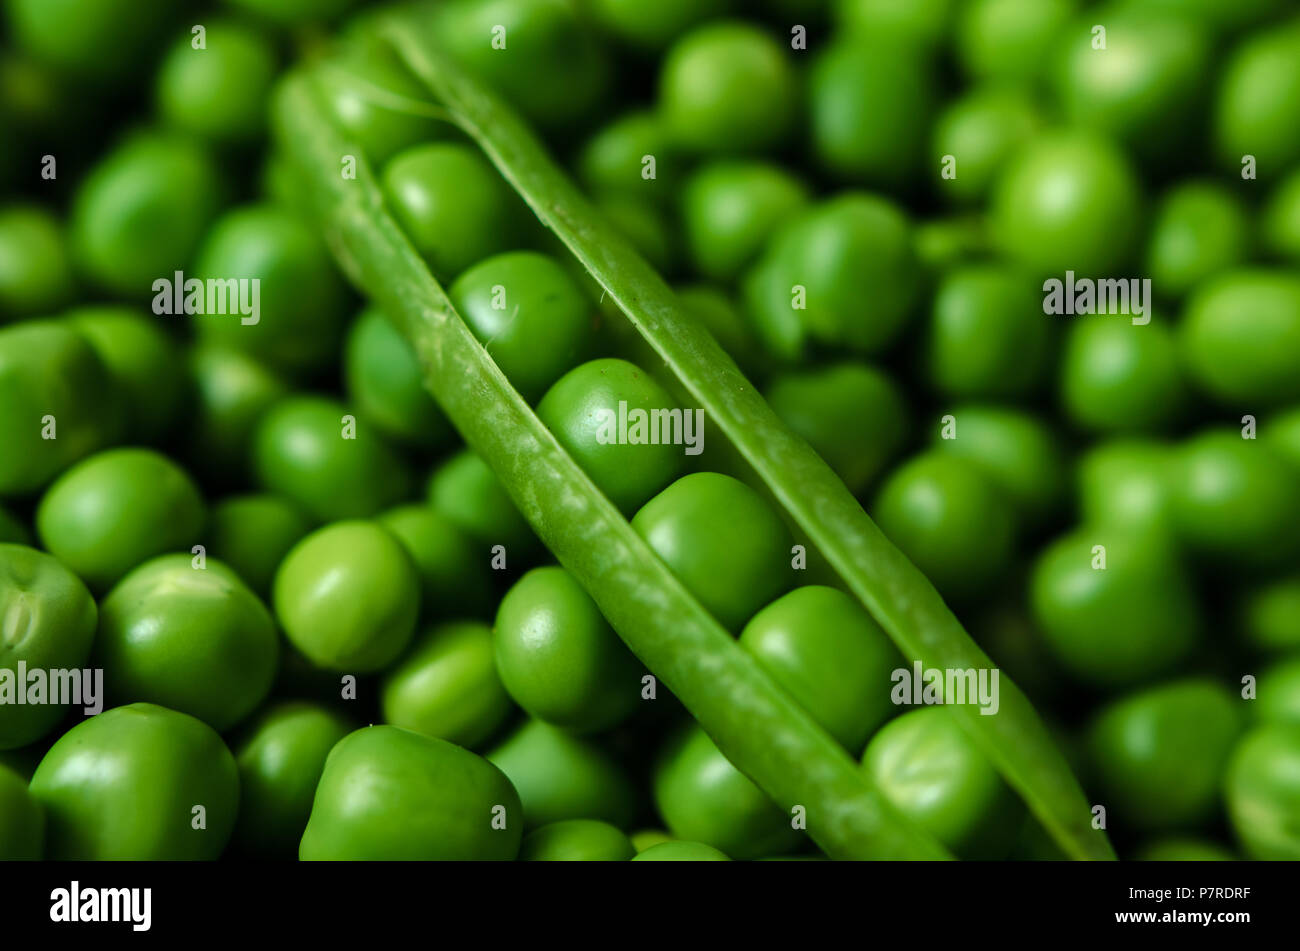 Green pea pod on top of green peas Stock Photo